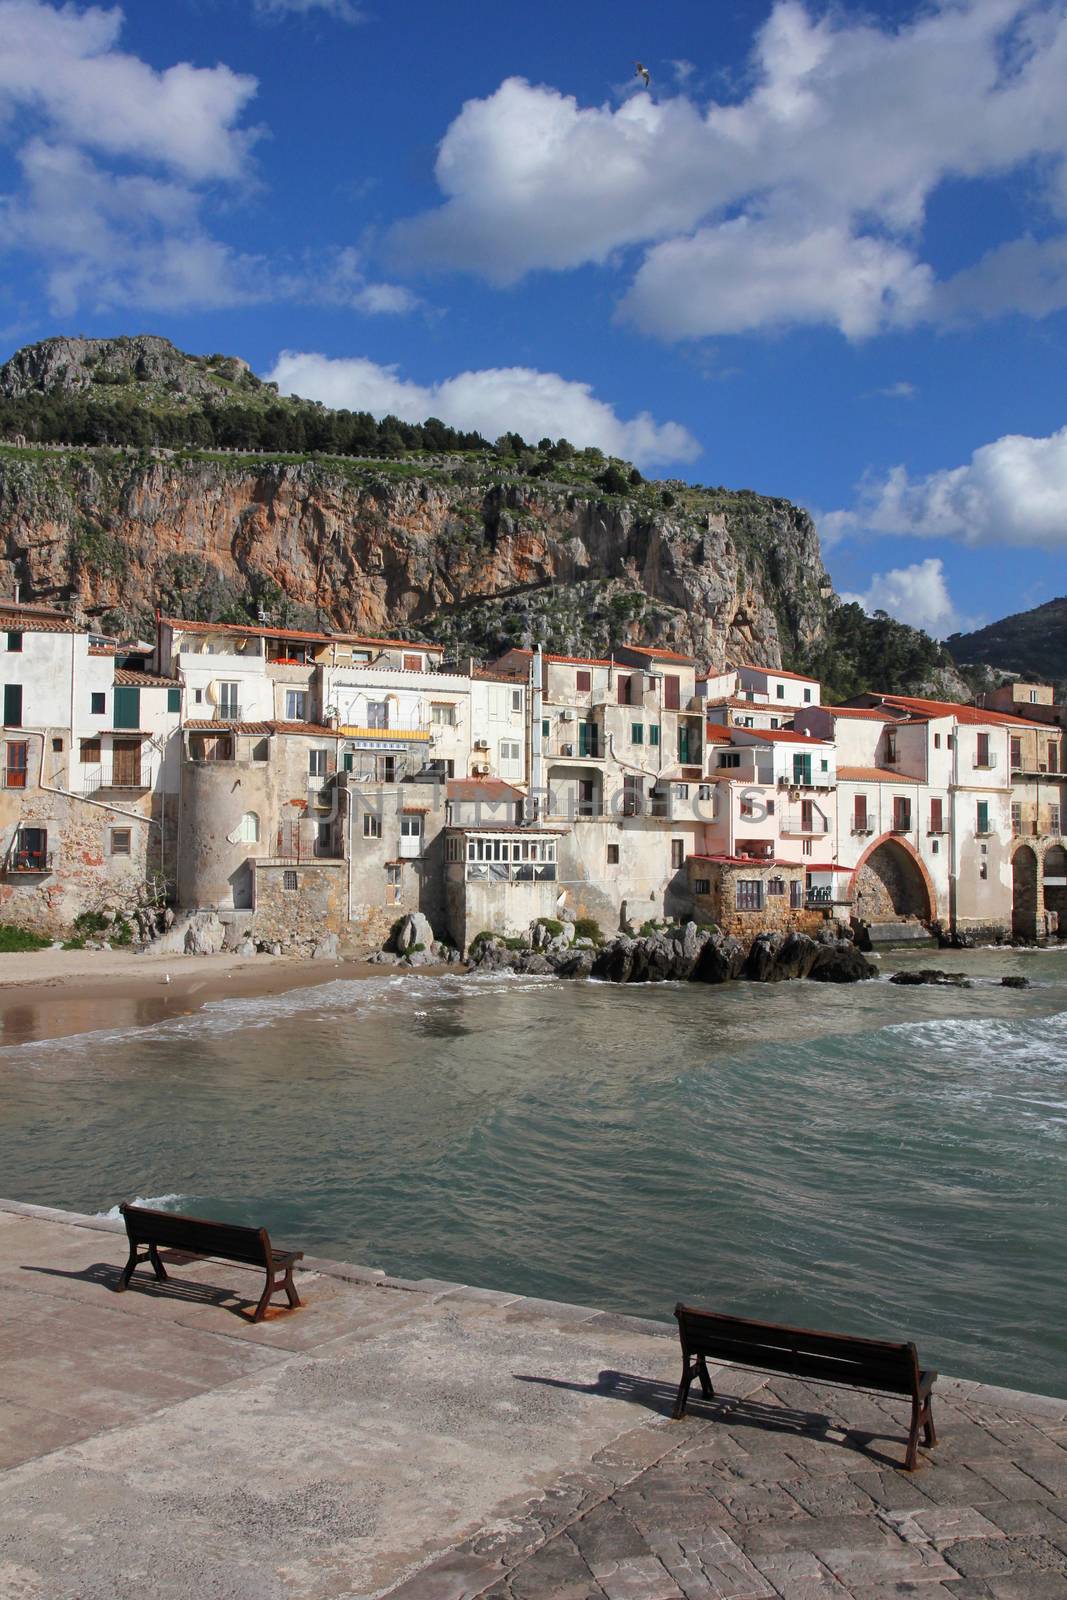 Italy. Sicily island . Province of Palermo. Cefalu. by oxanatravel